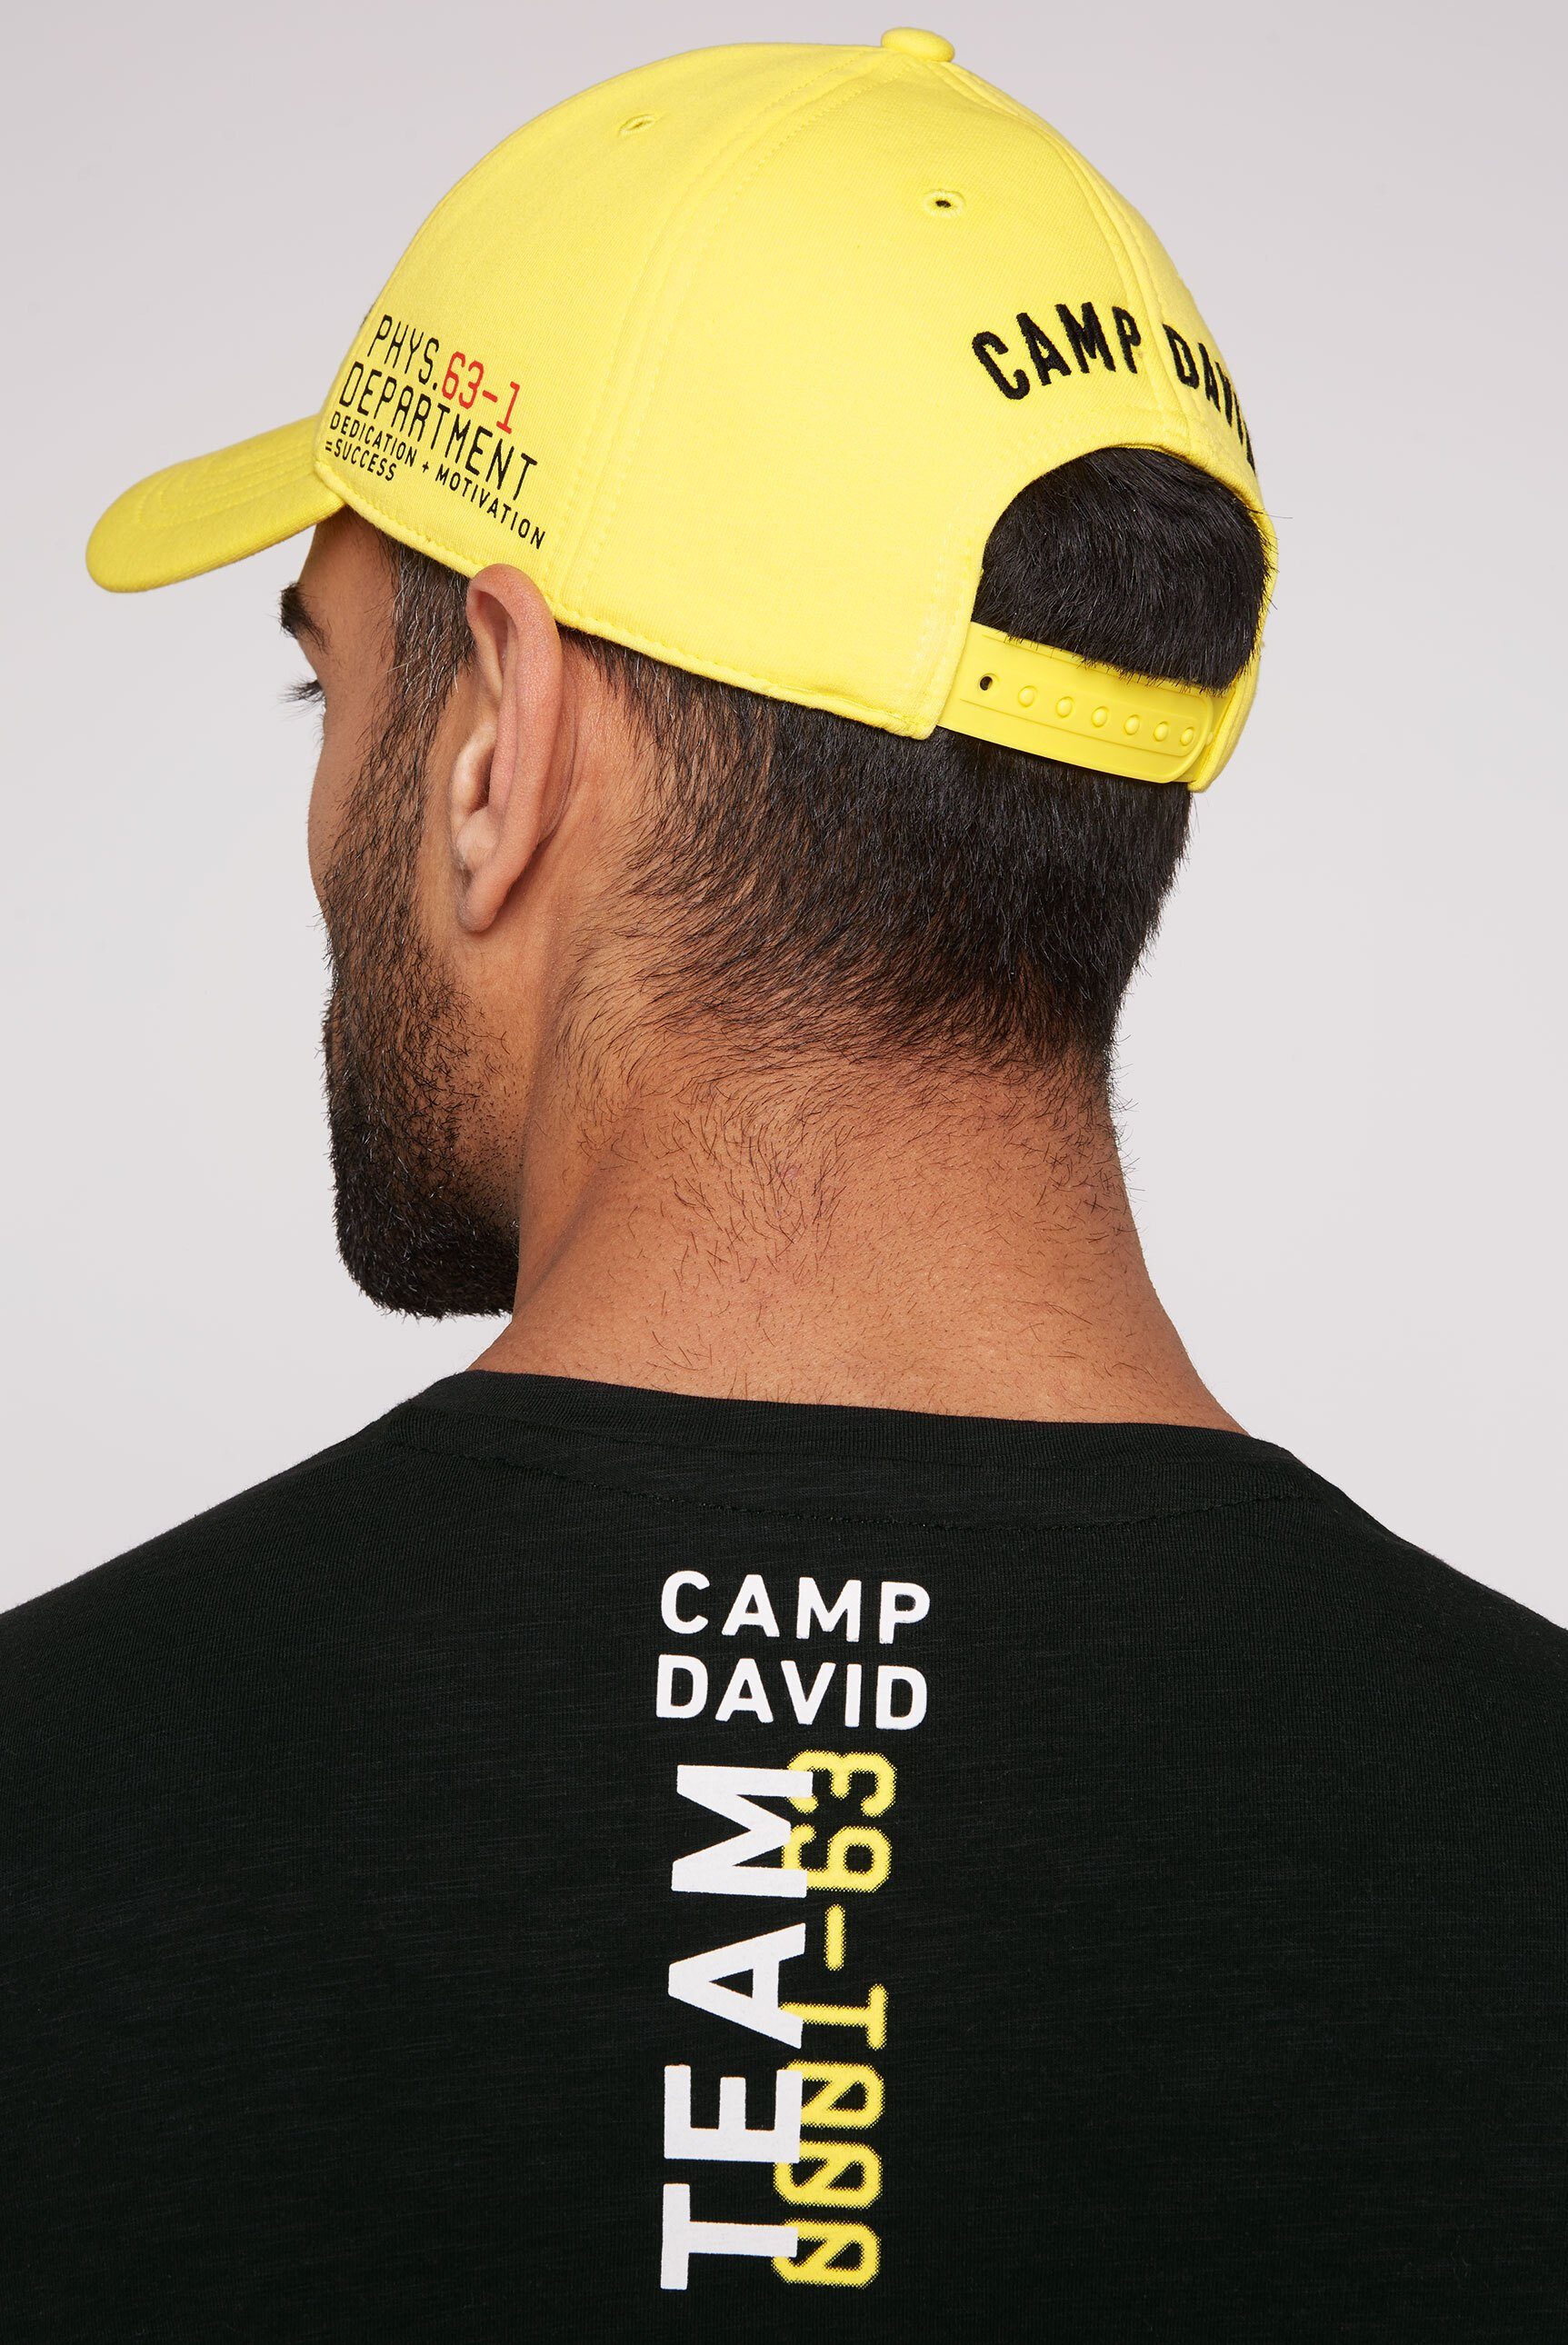 CAMP DAVID mit Verstellbarer Cap Belüftungslöcher, Baseball Klippverschluss